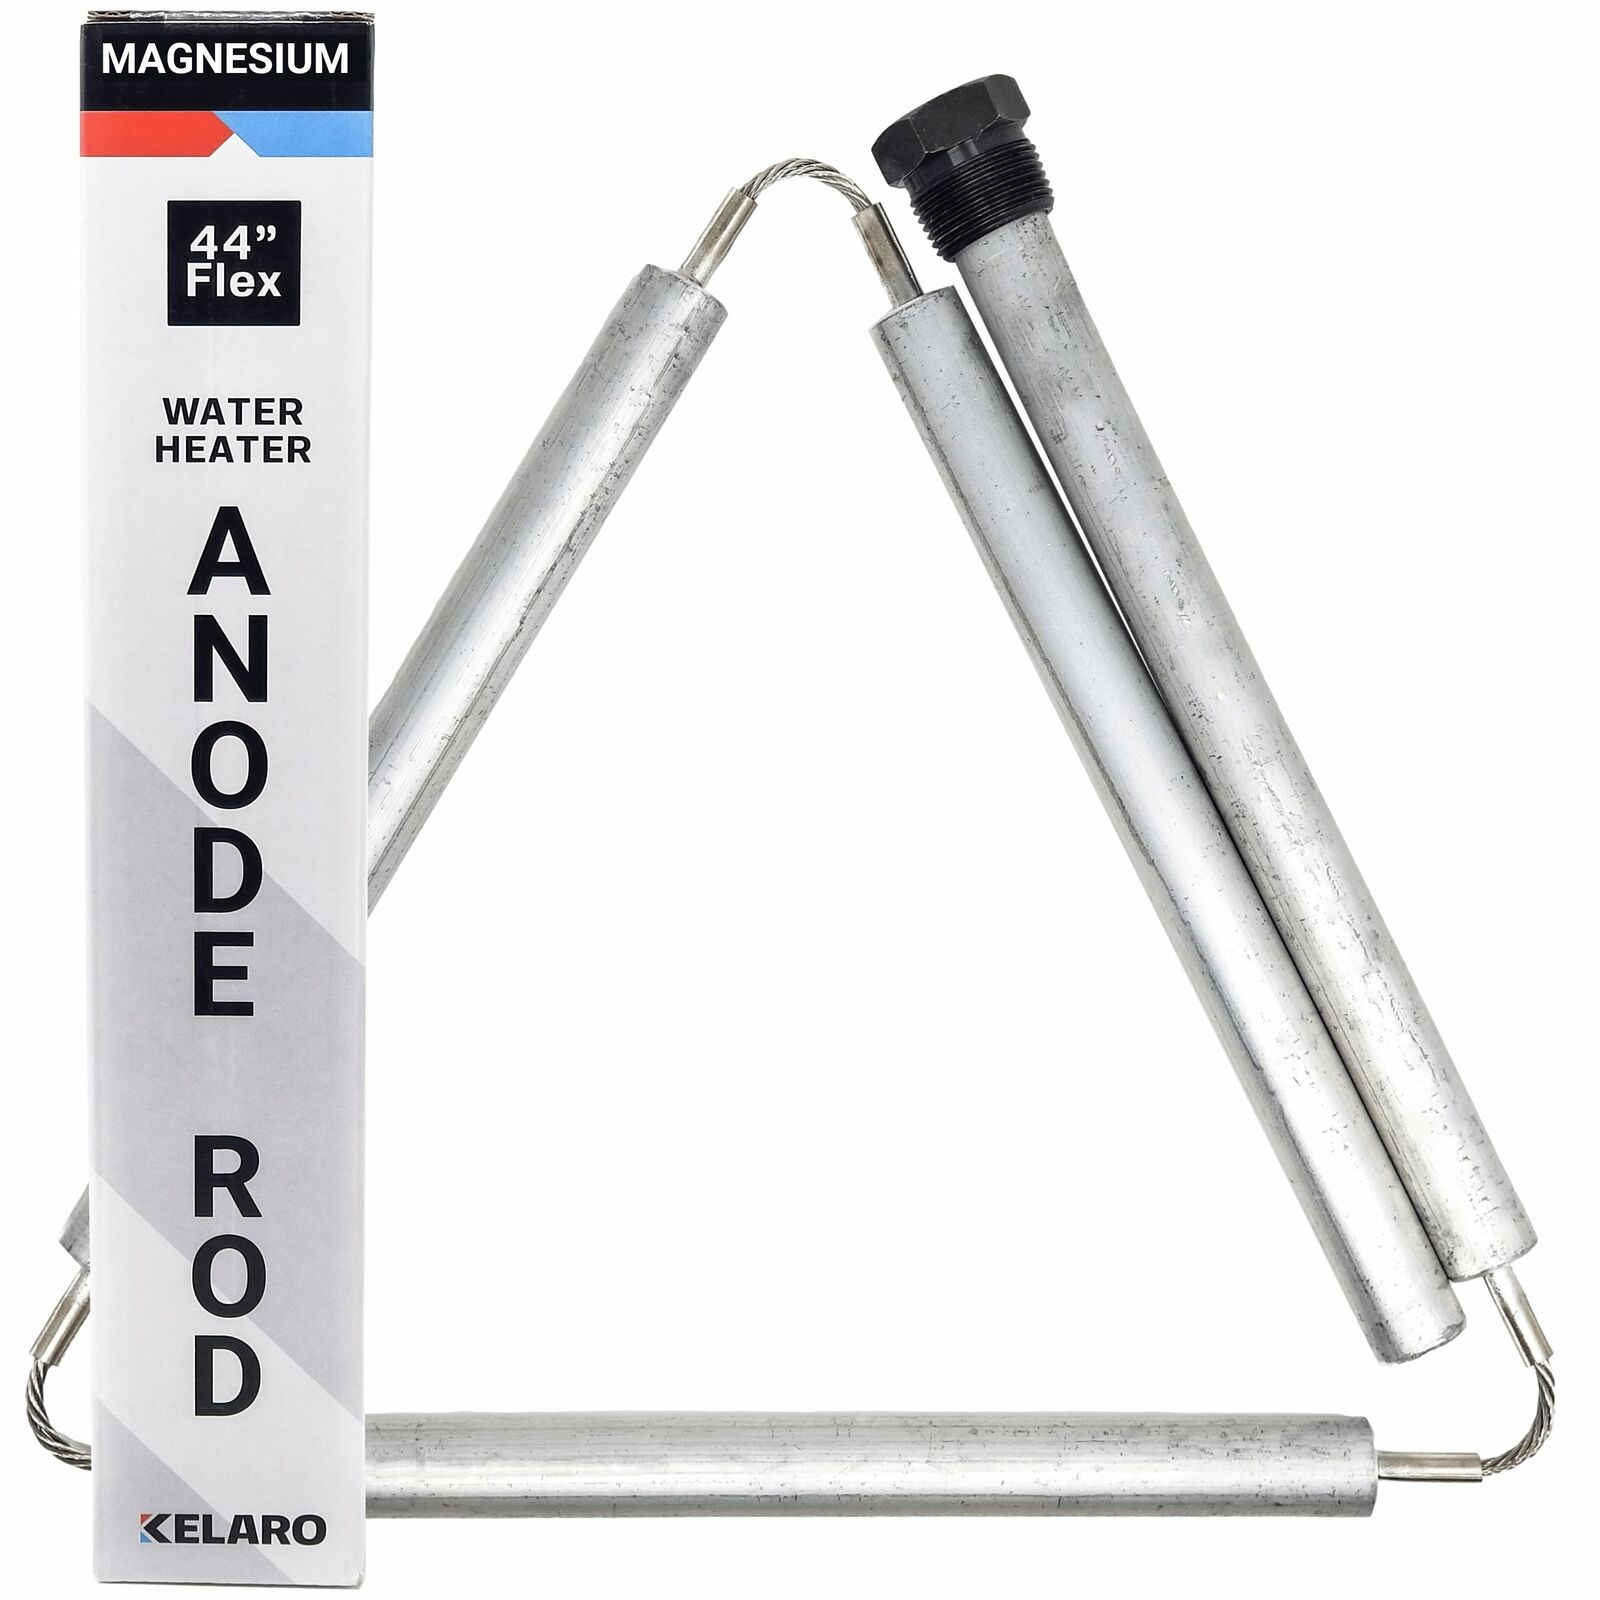 Magnesium Flexible Water Heater Anode Rod (44-inch) by Kelaro